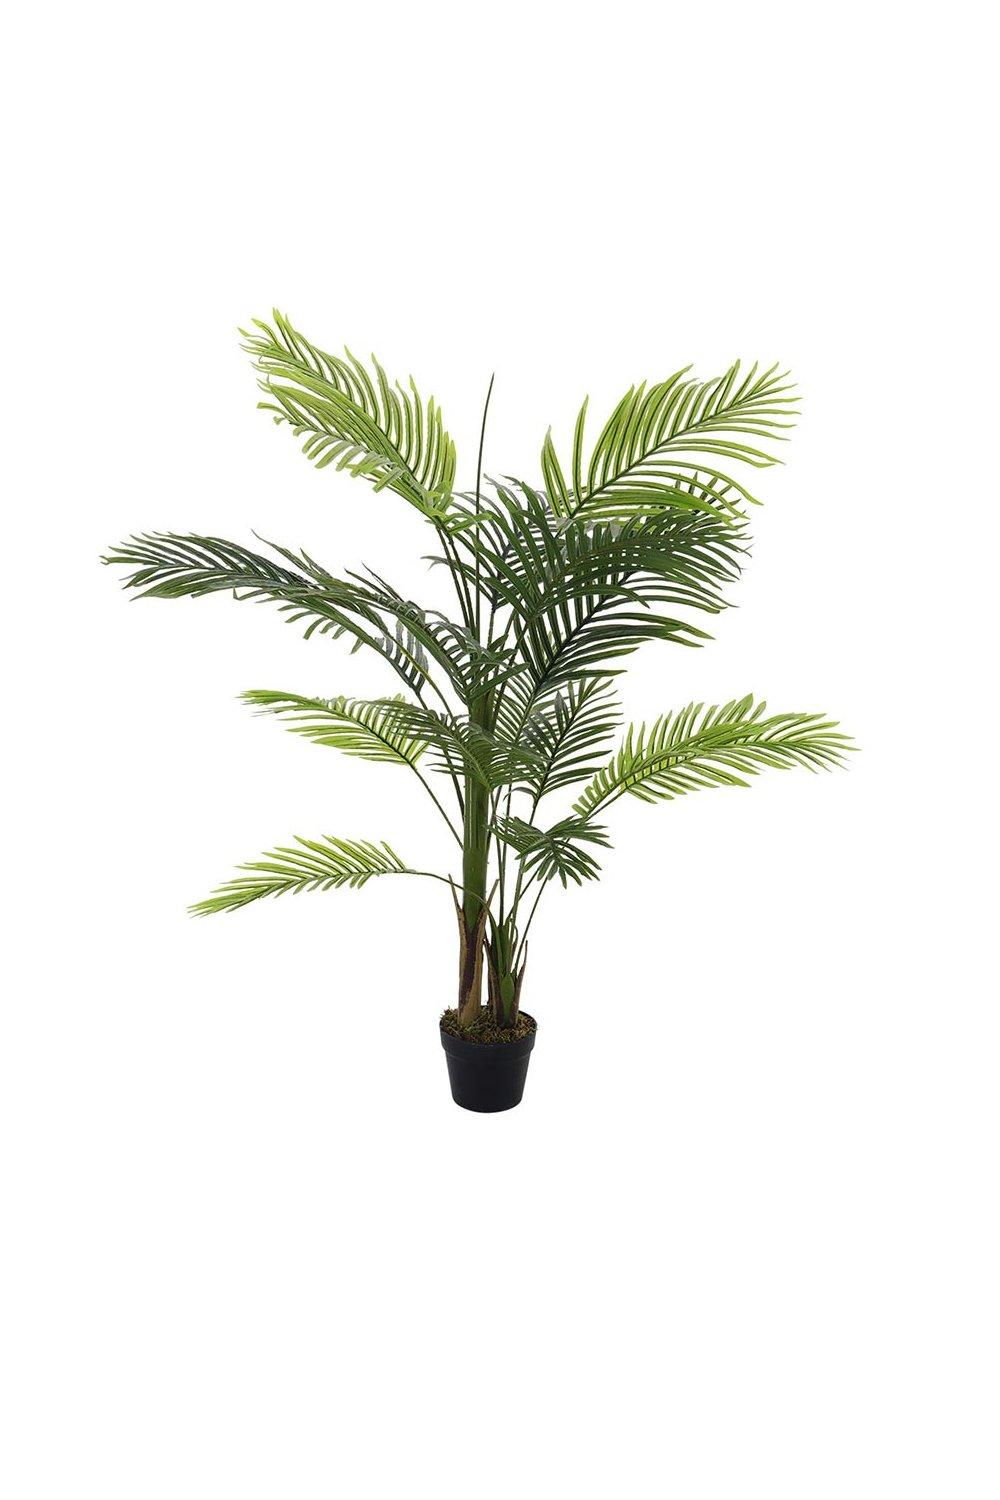 150Cm Artificial Palm Tree in Pot